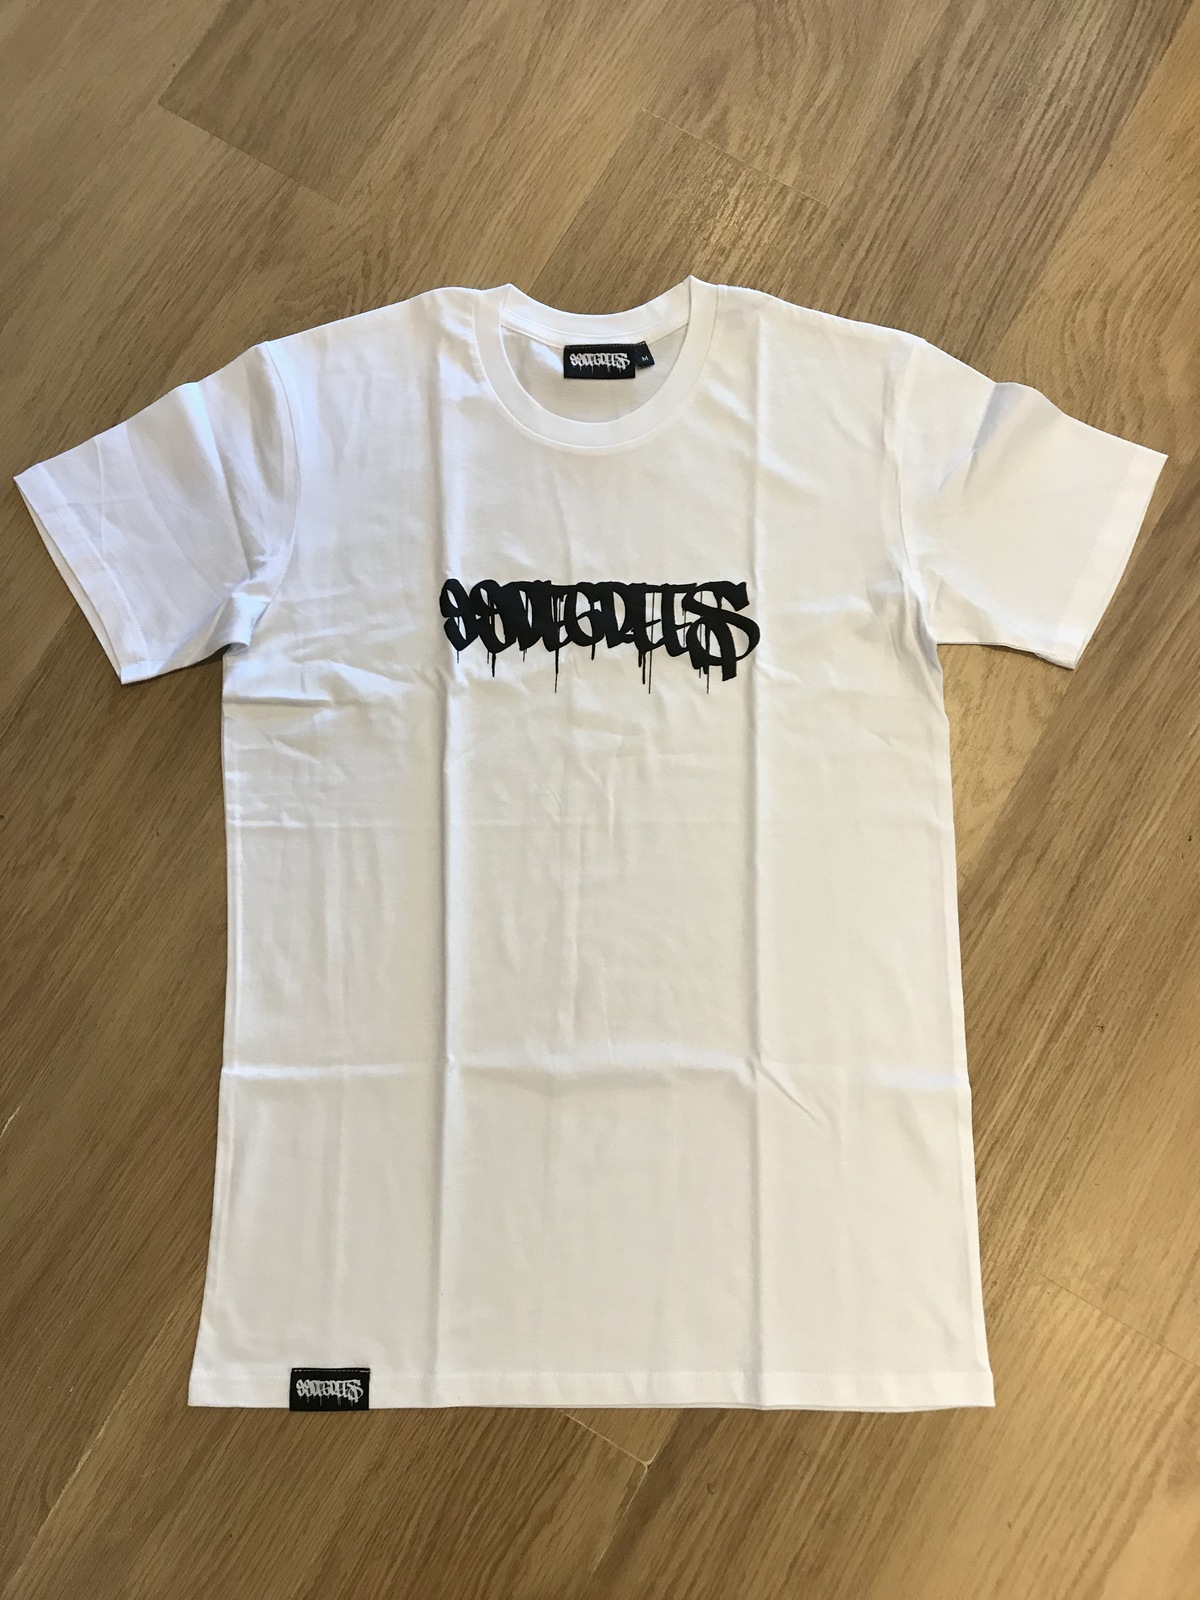 99 DEGREES Graffiti Tee T-shirt WHITE - 99 degrees